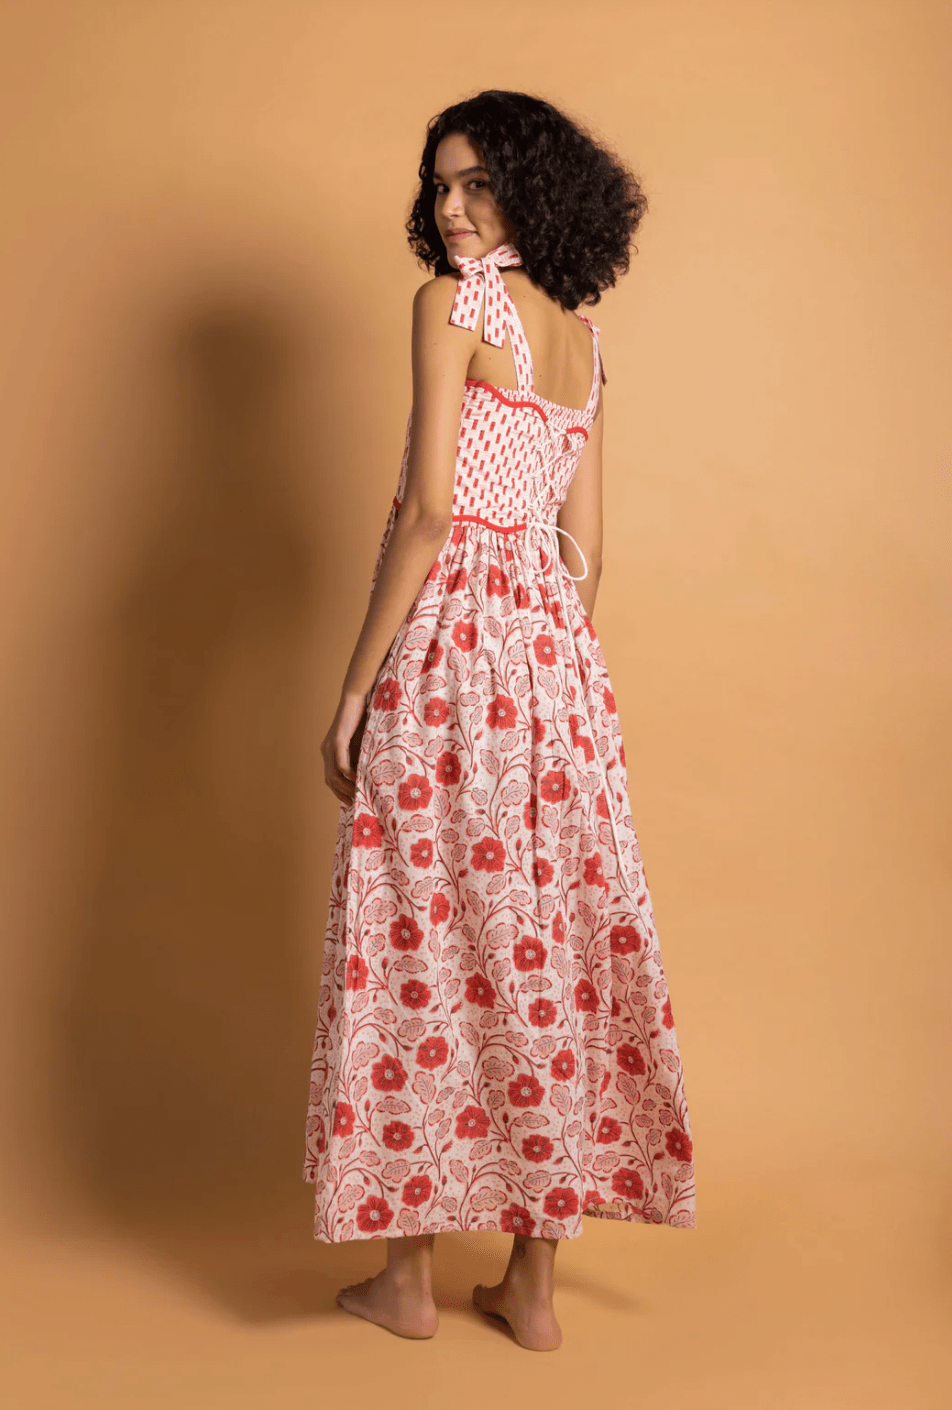 Daydress Dress Daydress | Lotta Dress in Red Poppies